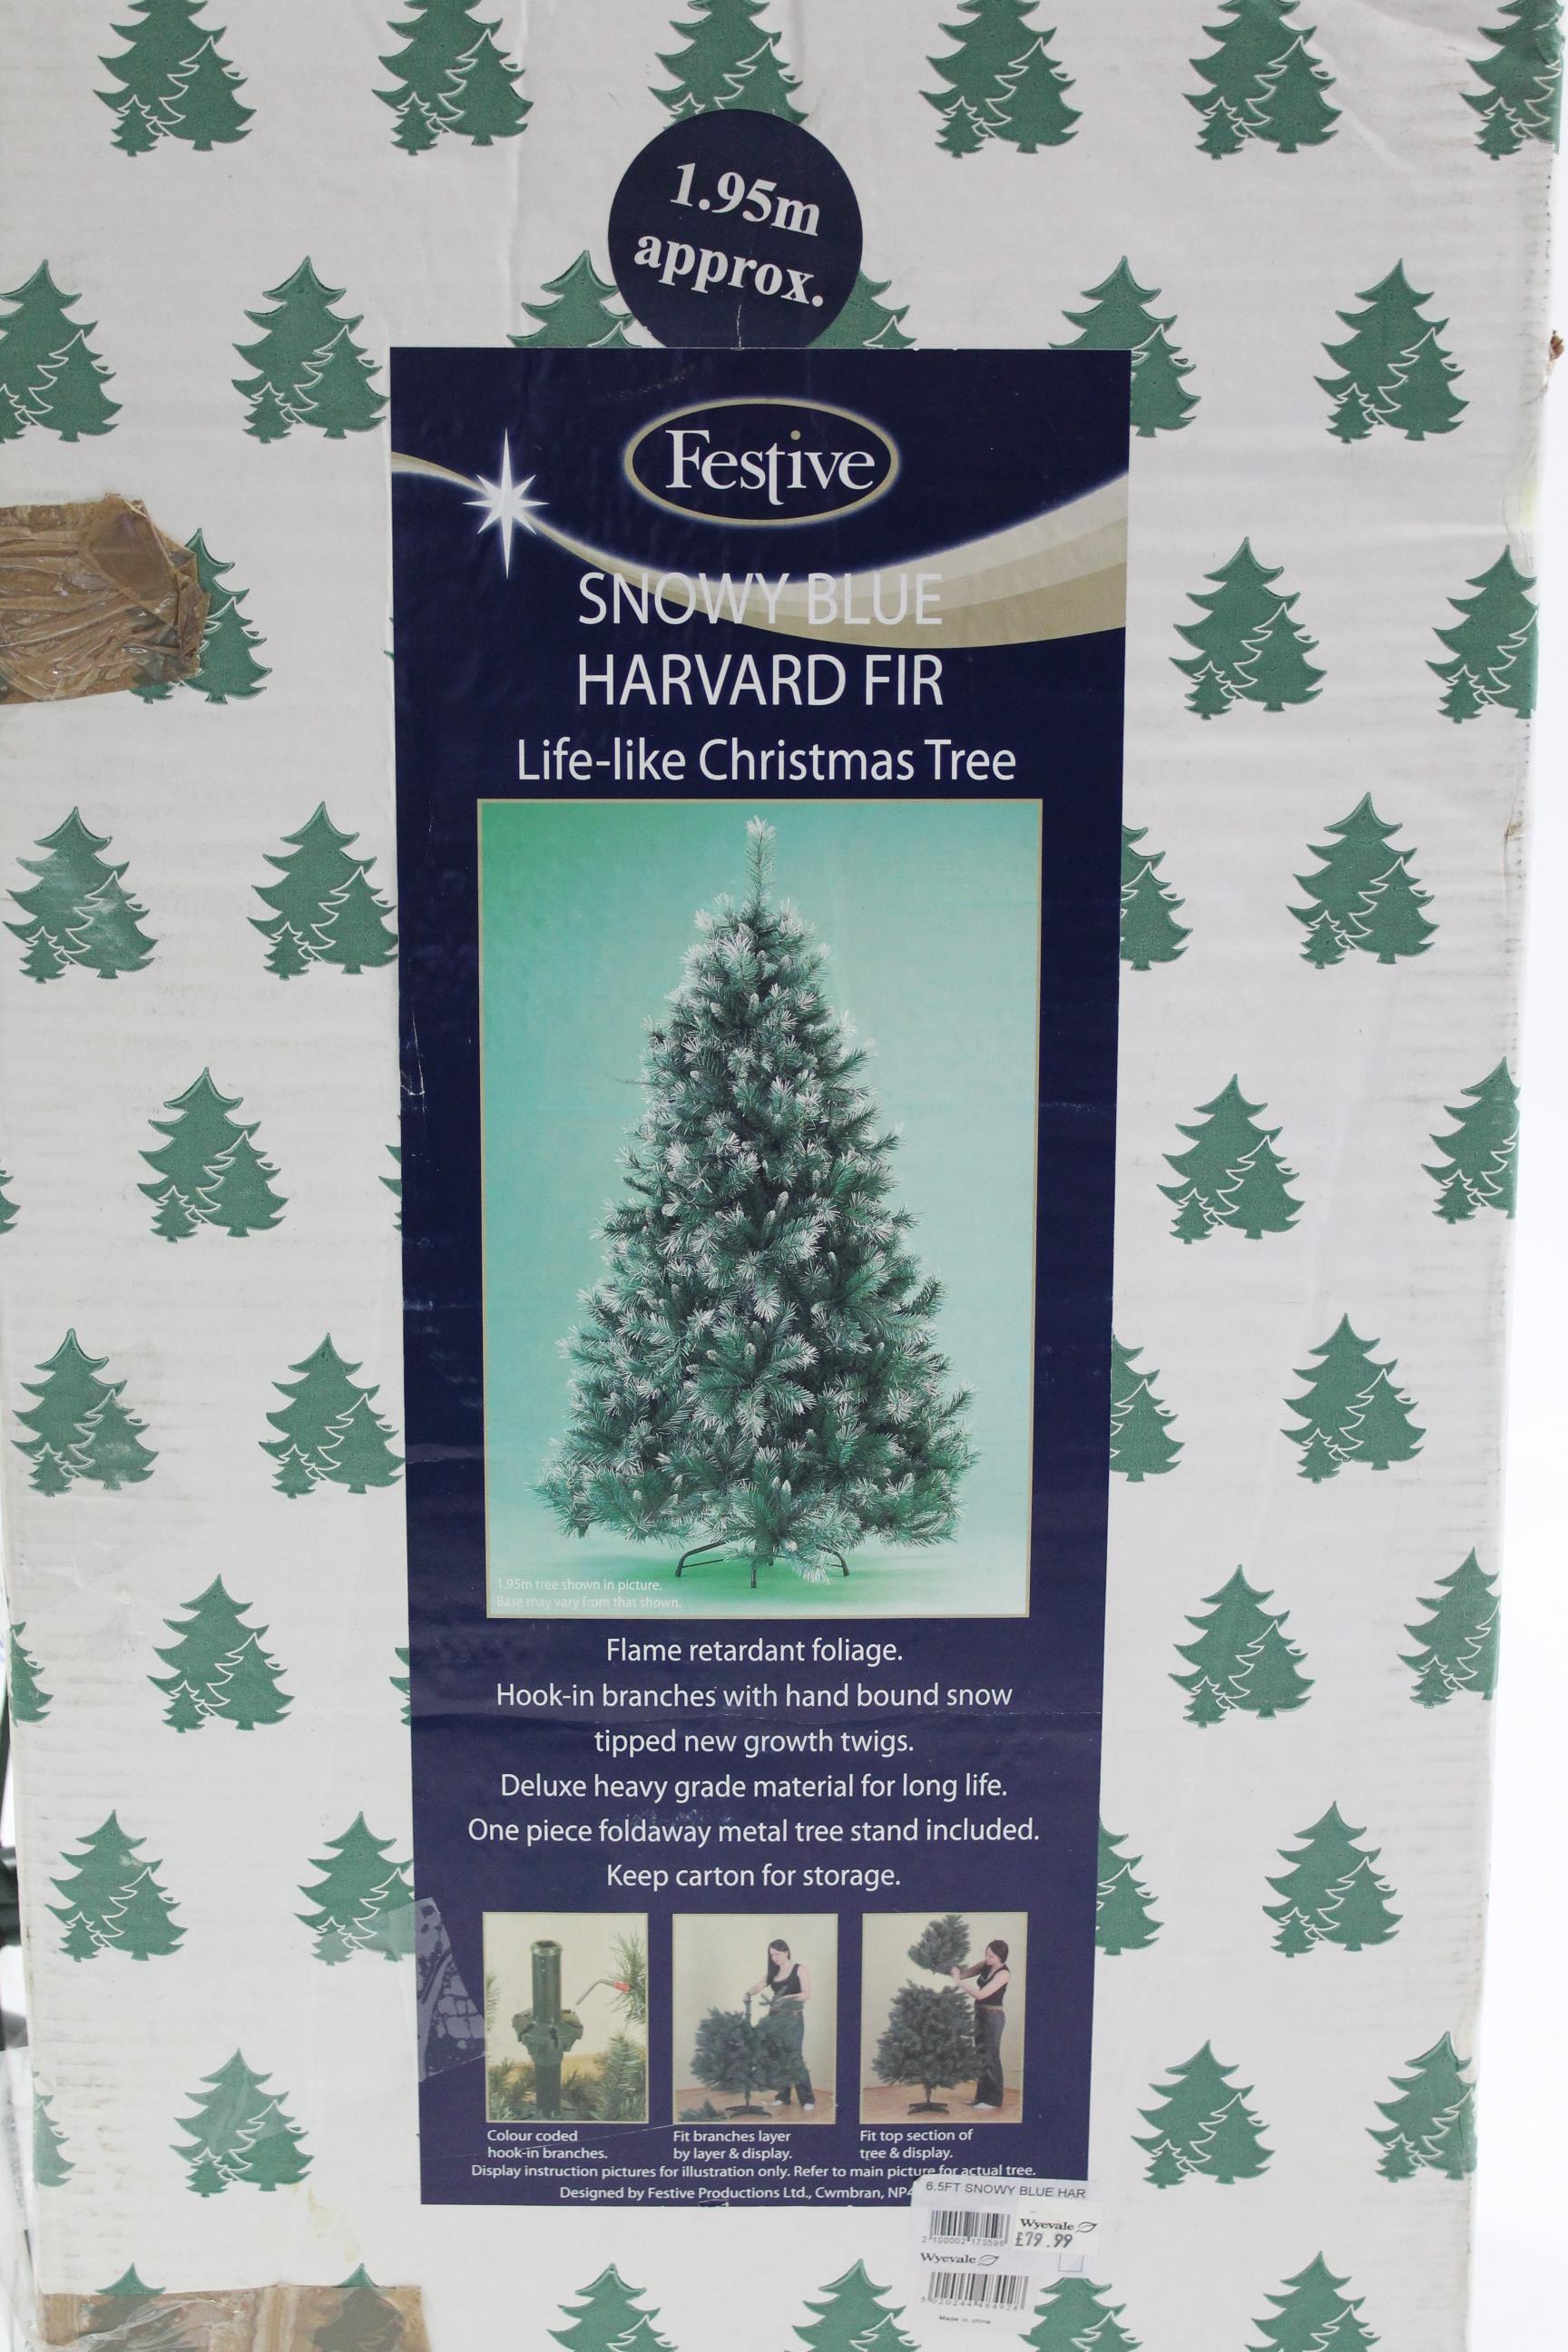 A festive “Snowy Blue Harvard Fir” 1.95m artificial Christmas tree, boxed.